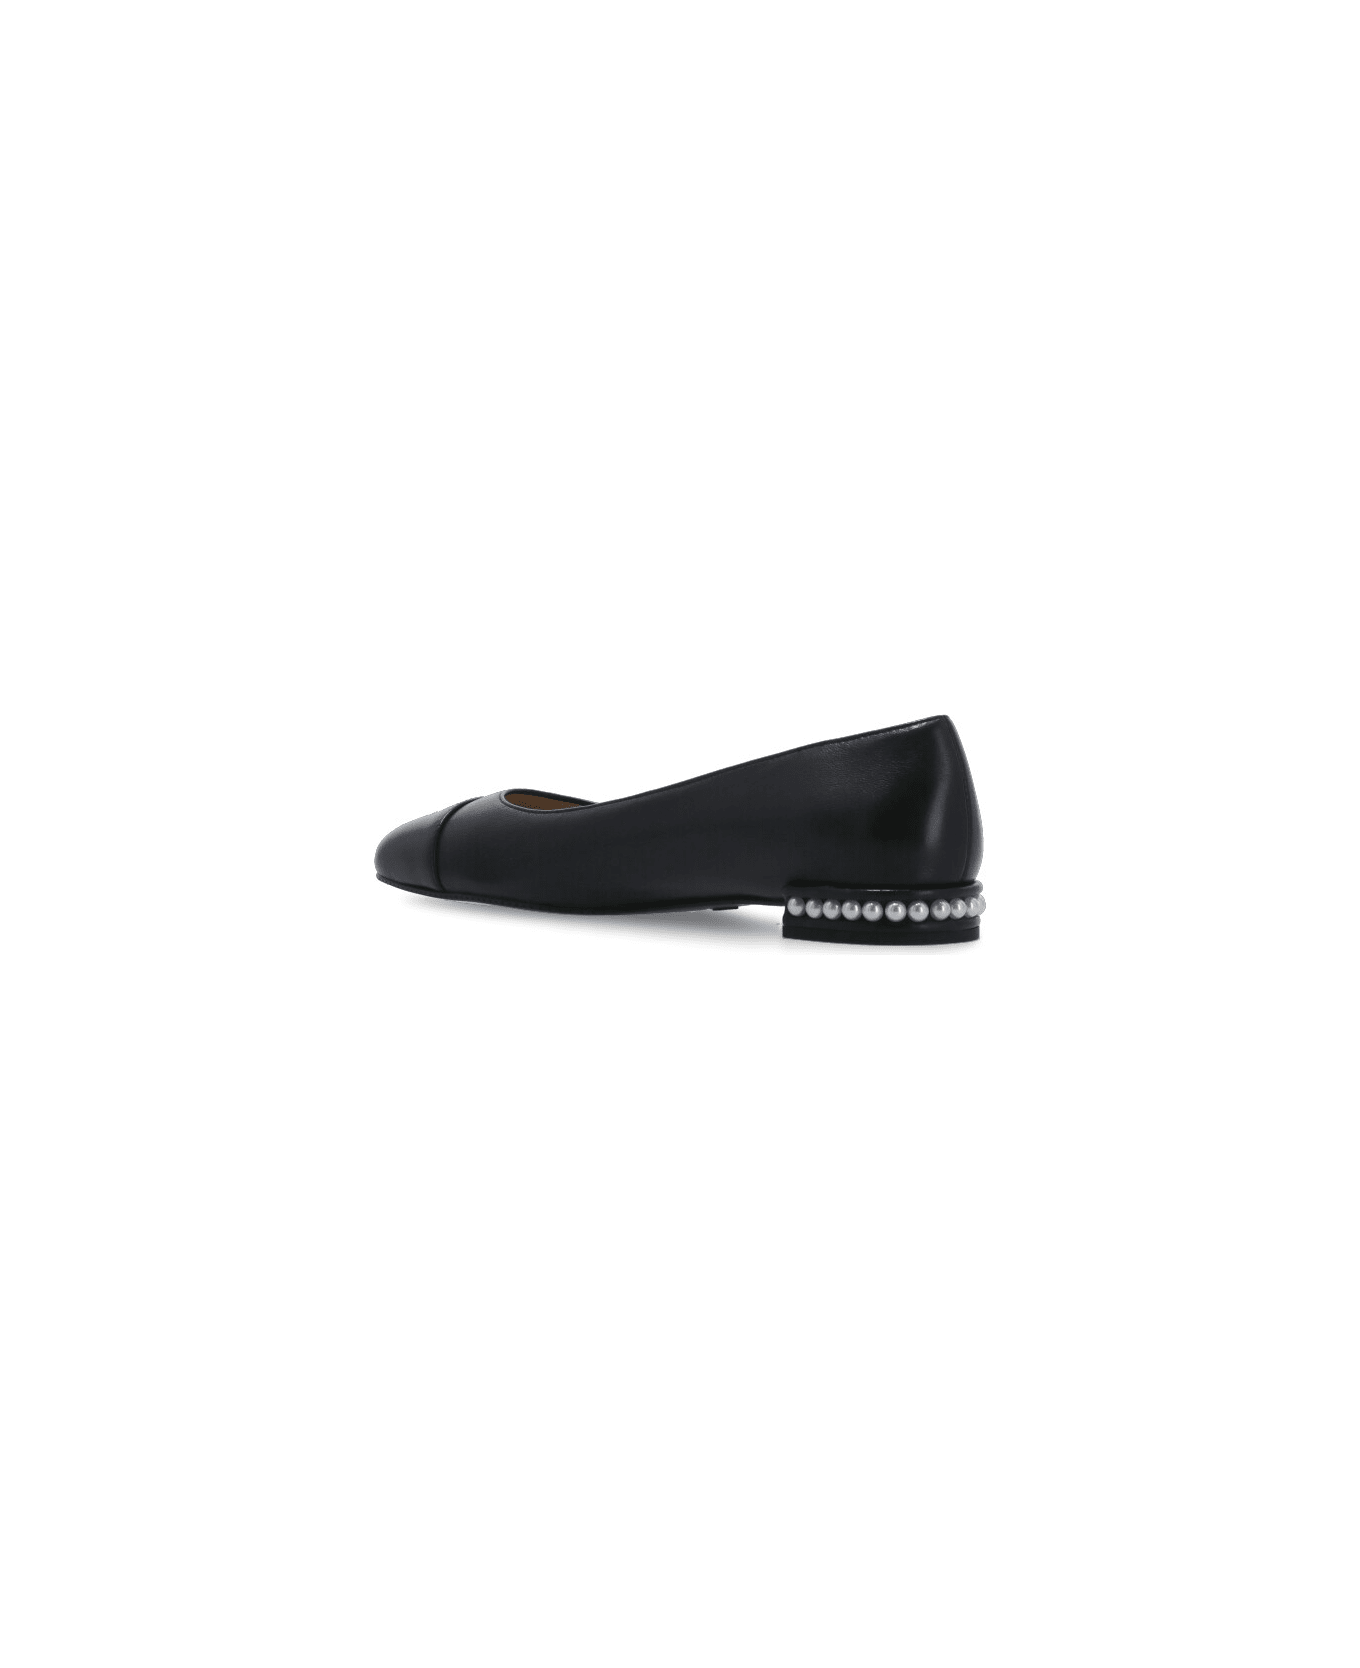 Stuart Weitzman Pearl Ballerina Shoes - Black フラットシューズ